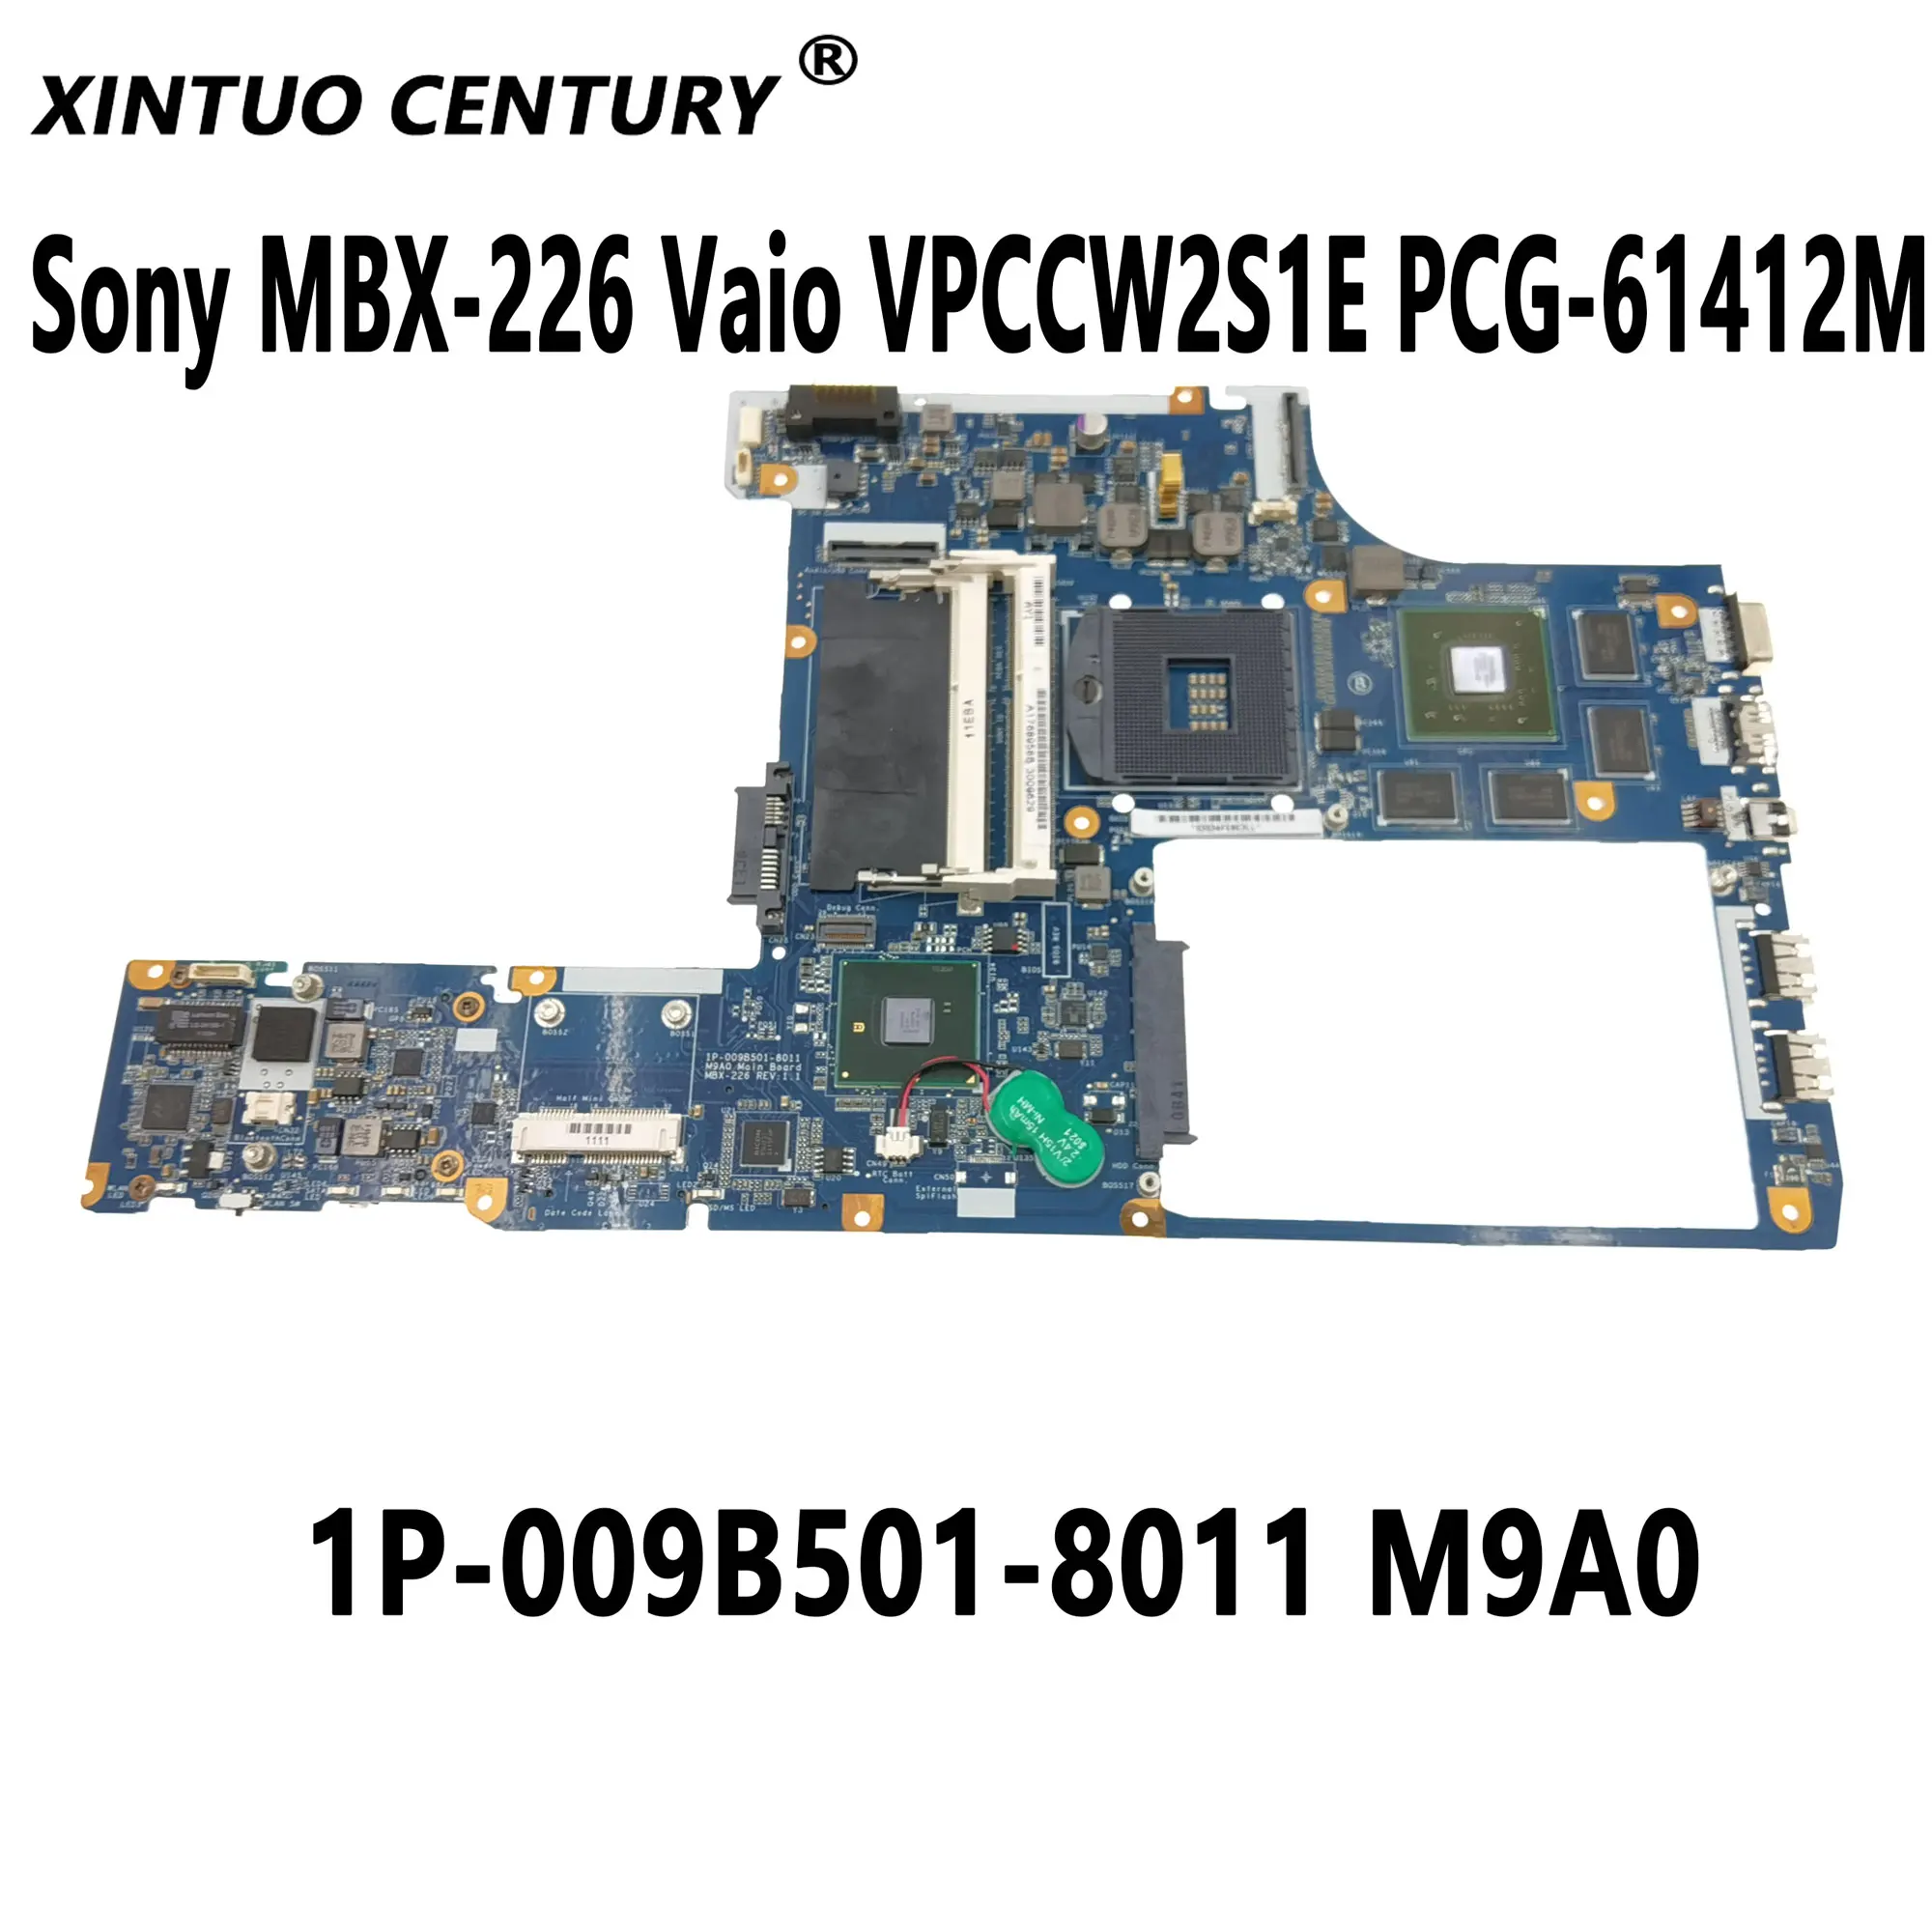 A1768958B A1768958A For Sony MBX-226 Vaio VPCCW2S1E PCG-61412M laptop motherboard 1P-009B501-8011 M9A0 W/ N11P-LP1-A3 100% Teste